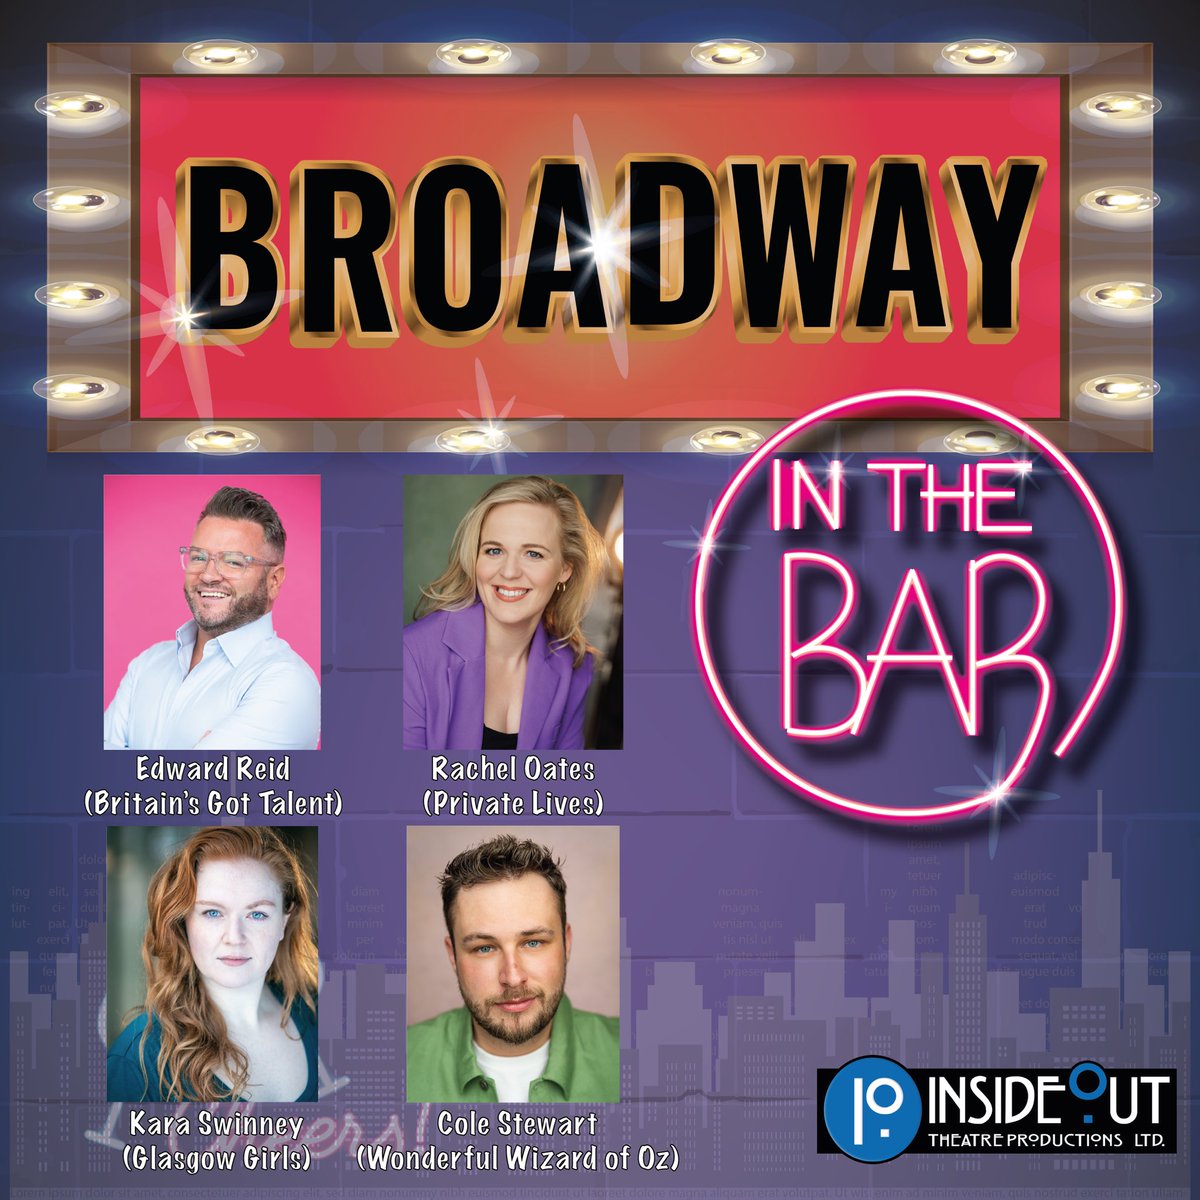 Broadway in the Bar is back. Sunday 15th October starring @mredwardreid @OranMorGlasgow ticketweb.uk/event/broadway…